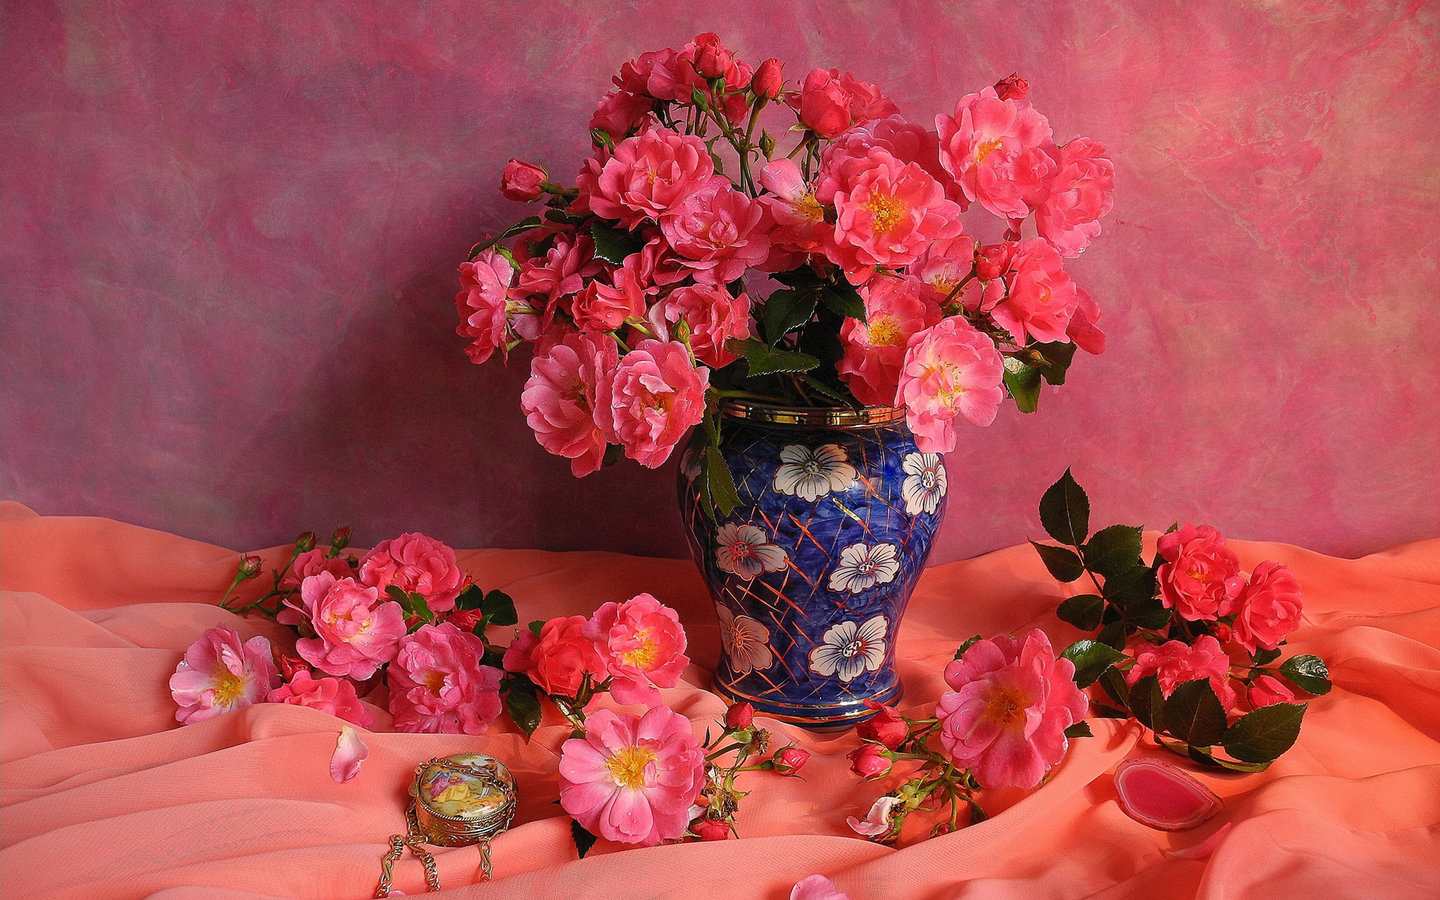  2014 Red Rose Flowers Desktop Background Wallpaper HD Wallpaper 1440x900